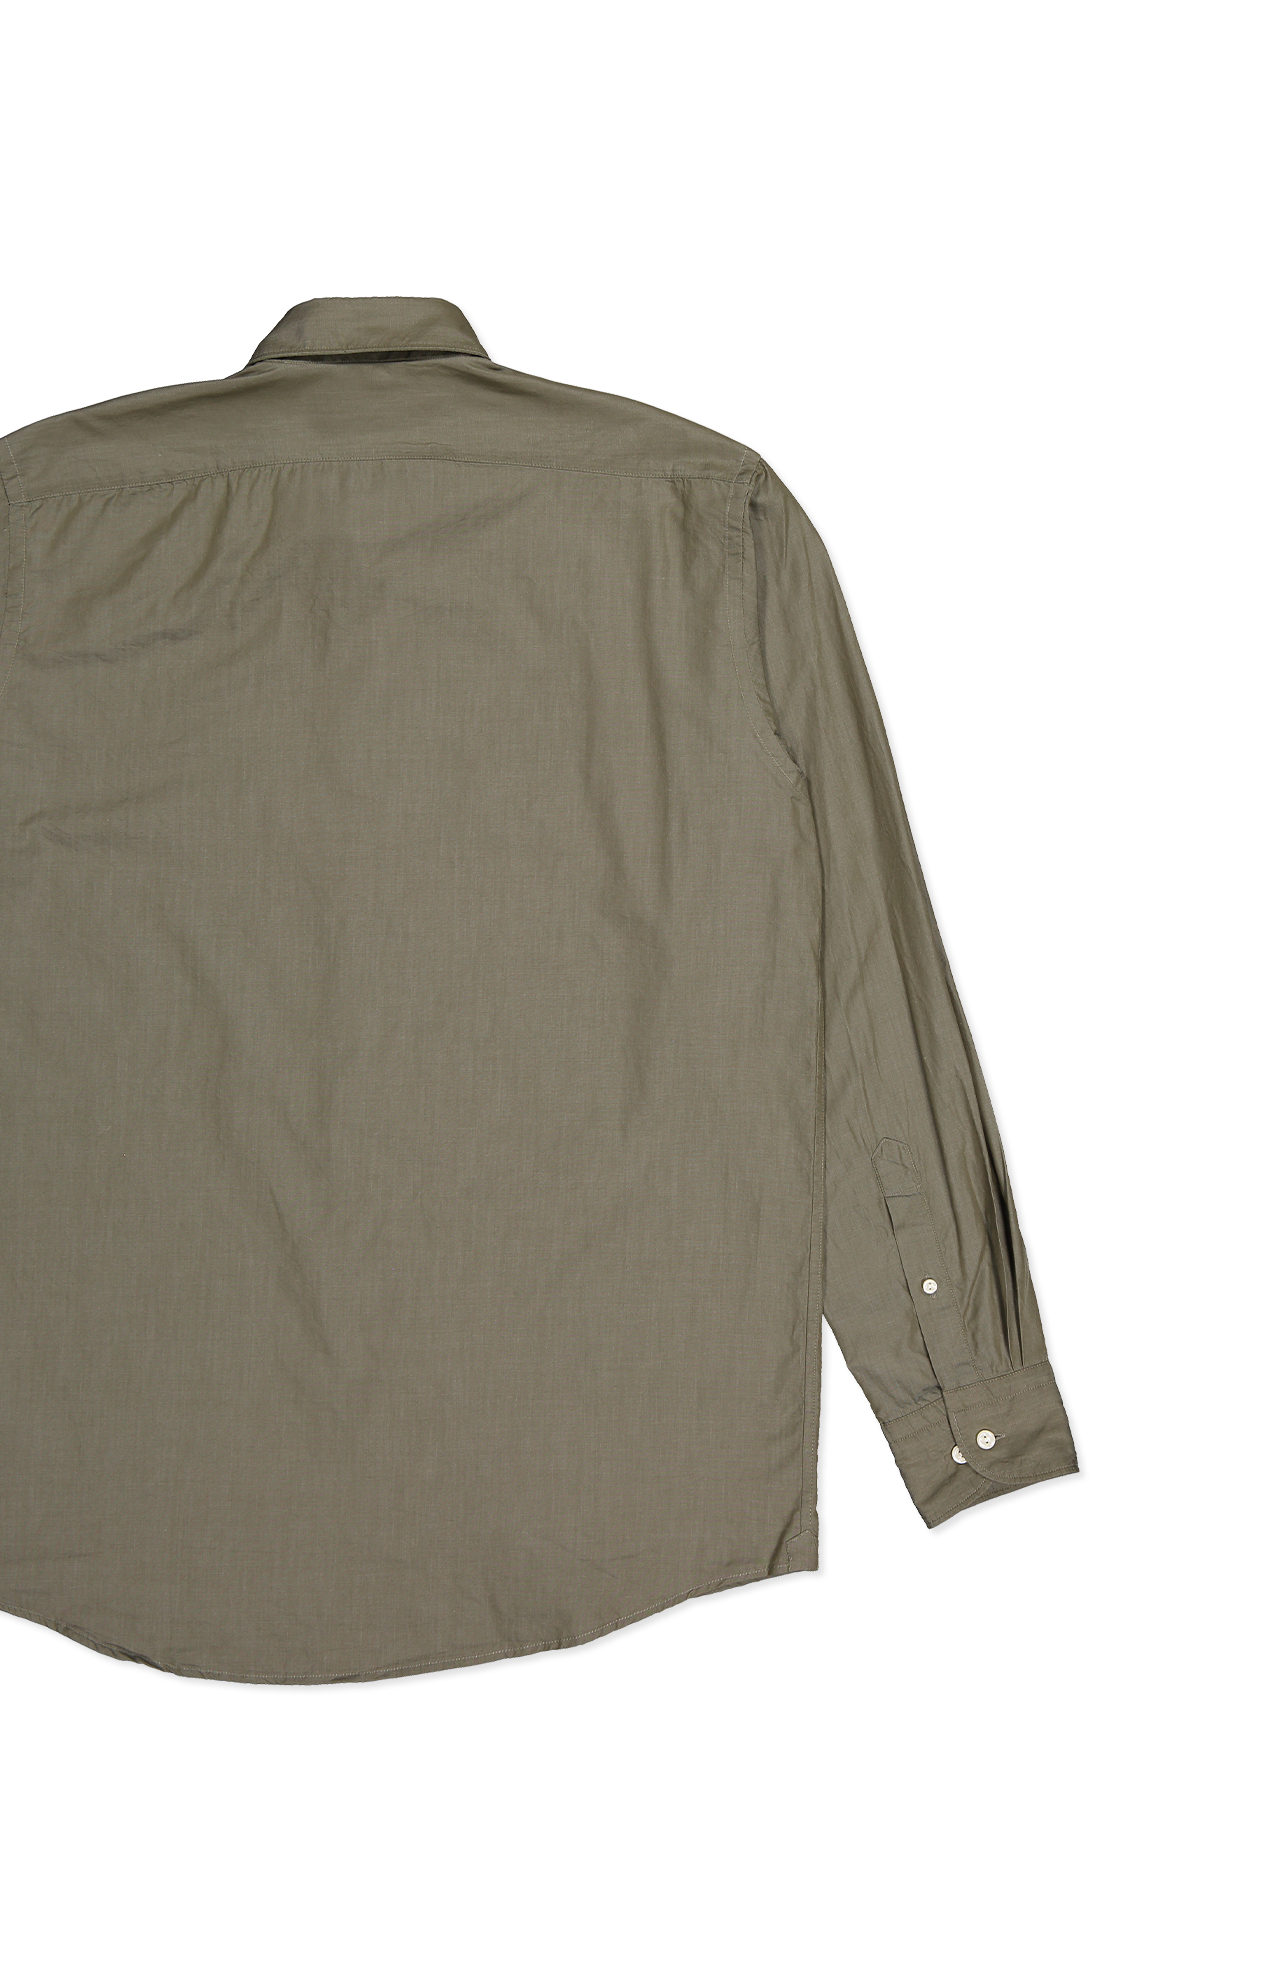 Eton Cotton Tencel Contemporary TShirt Green Back Flat Lay Image (7004978479219)